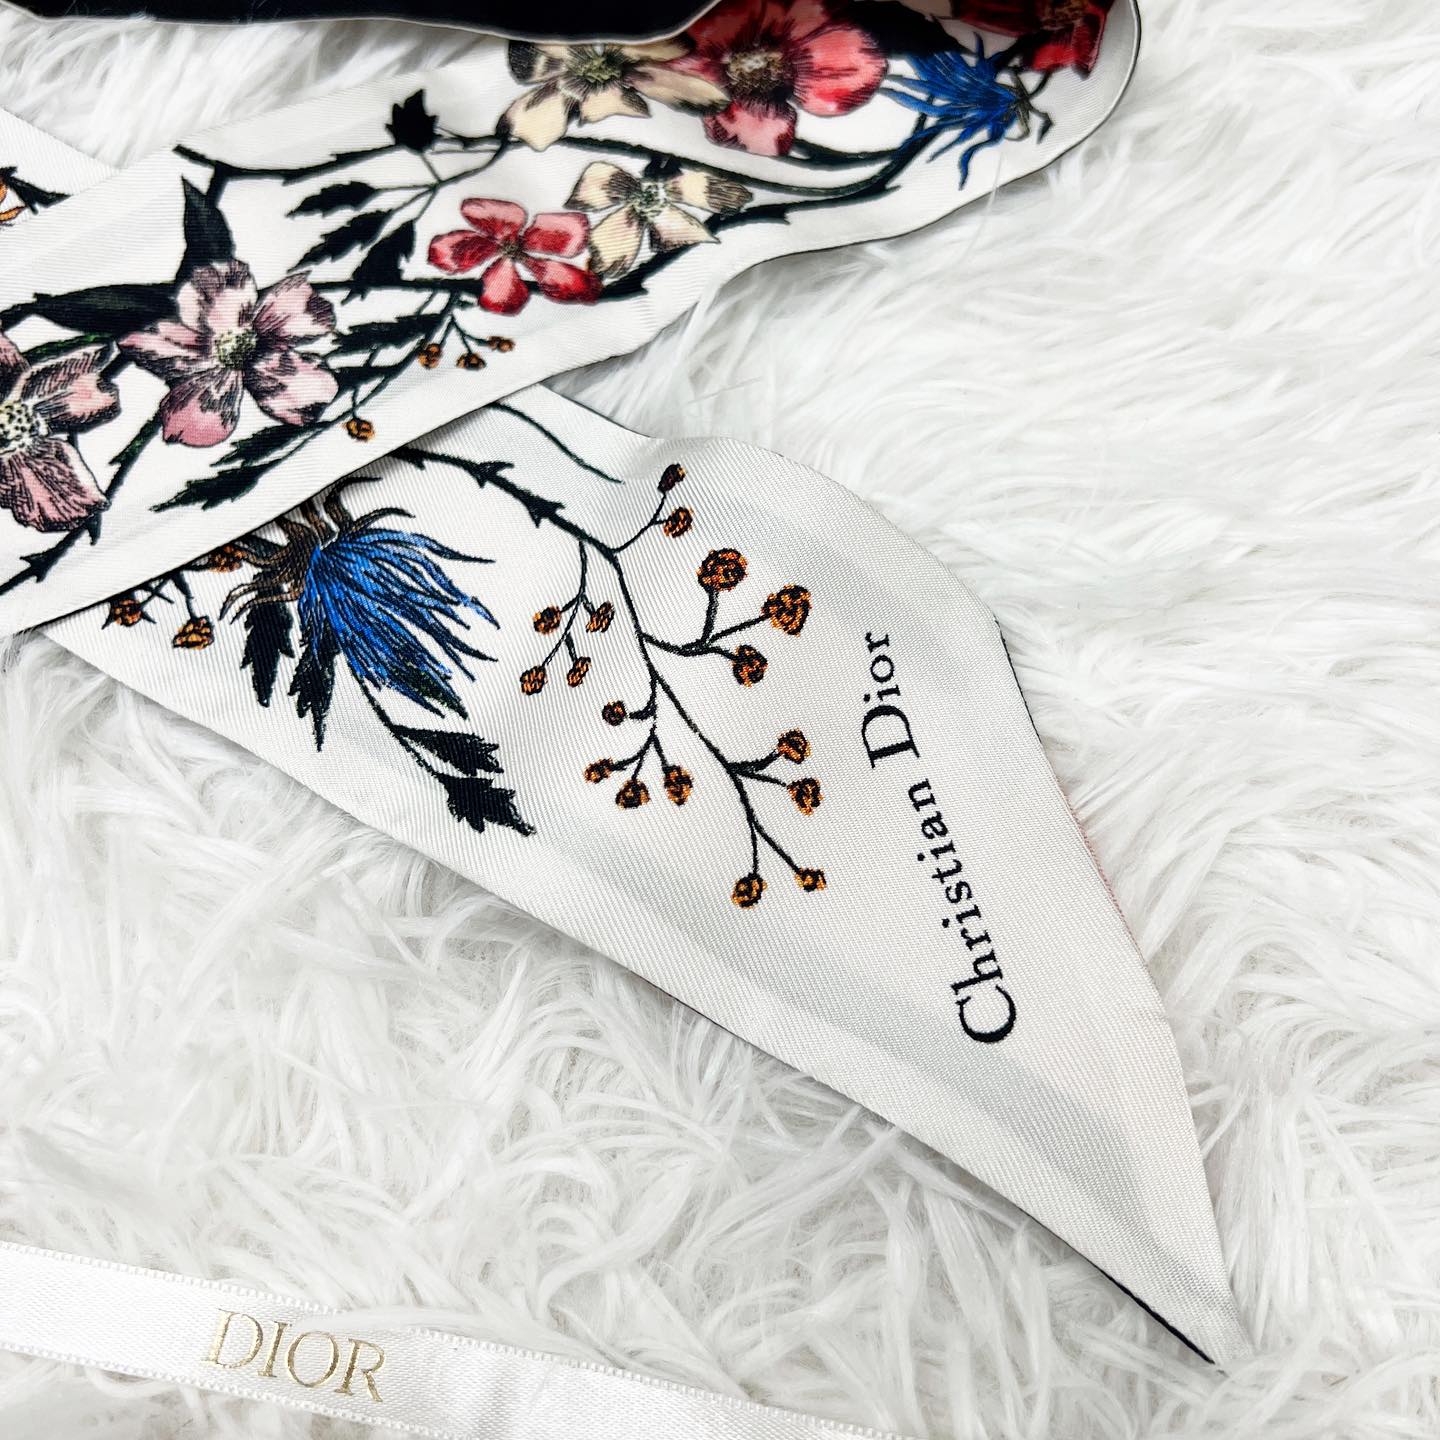 Christian Dior 100% Silk Scarf Twilly 真絲絲巾 連原裝盒